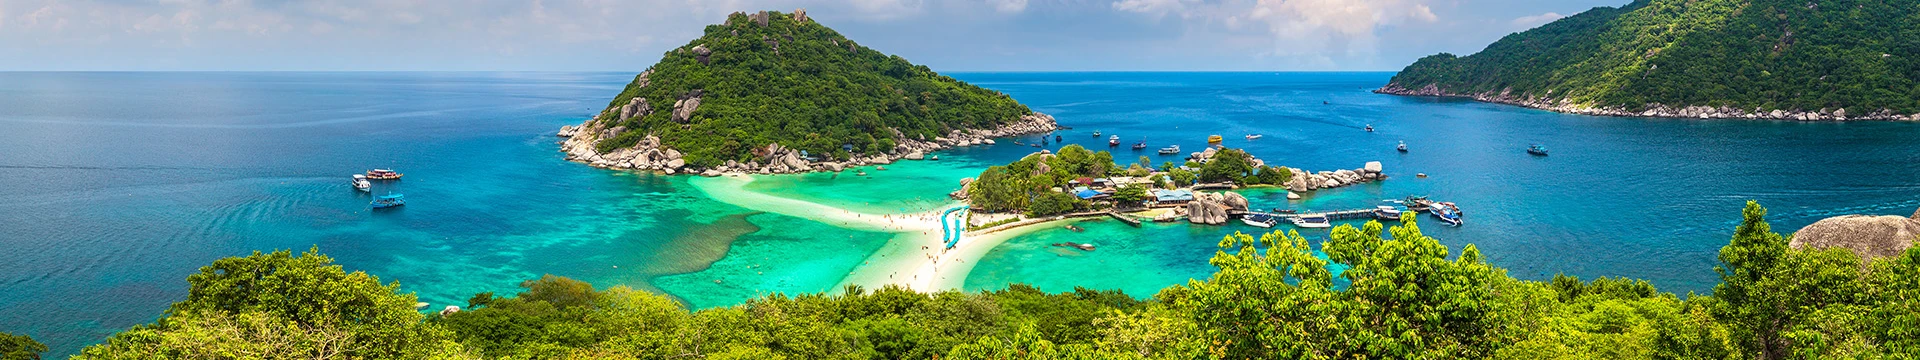 Hotels in Thailand